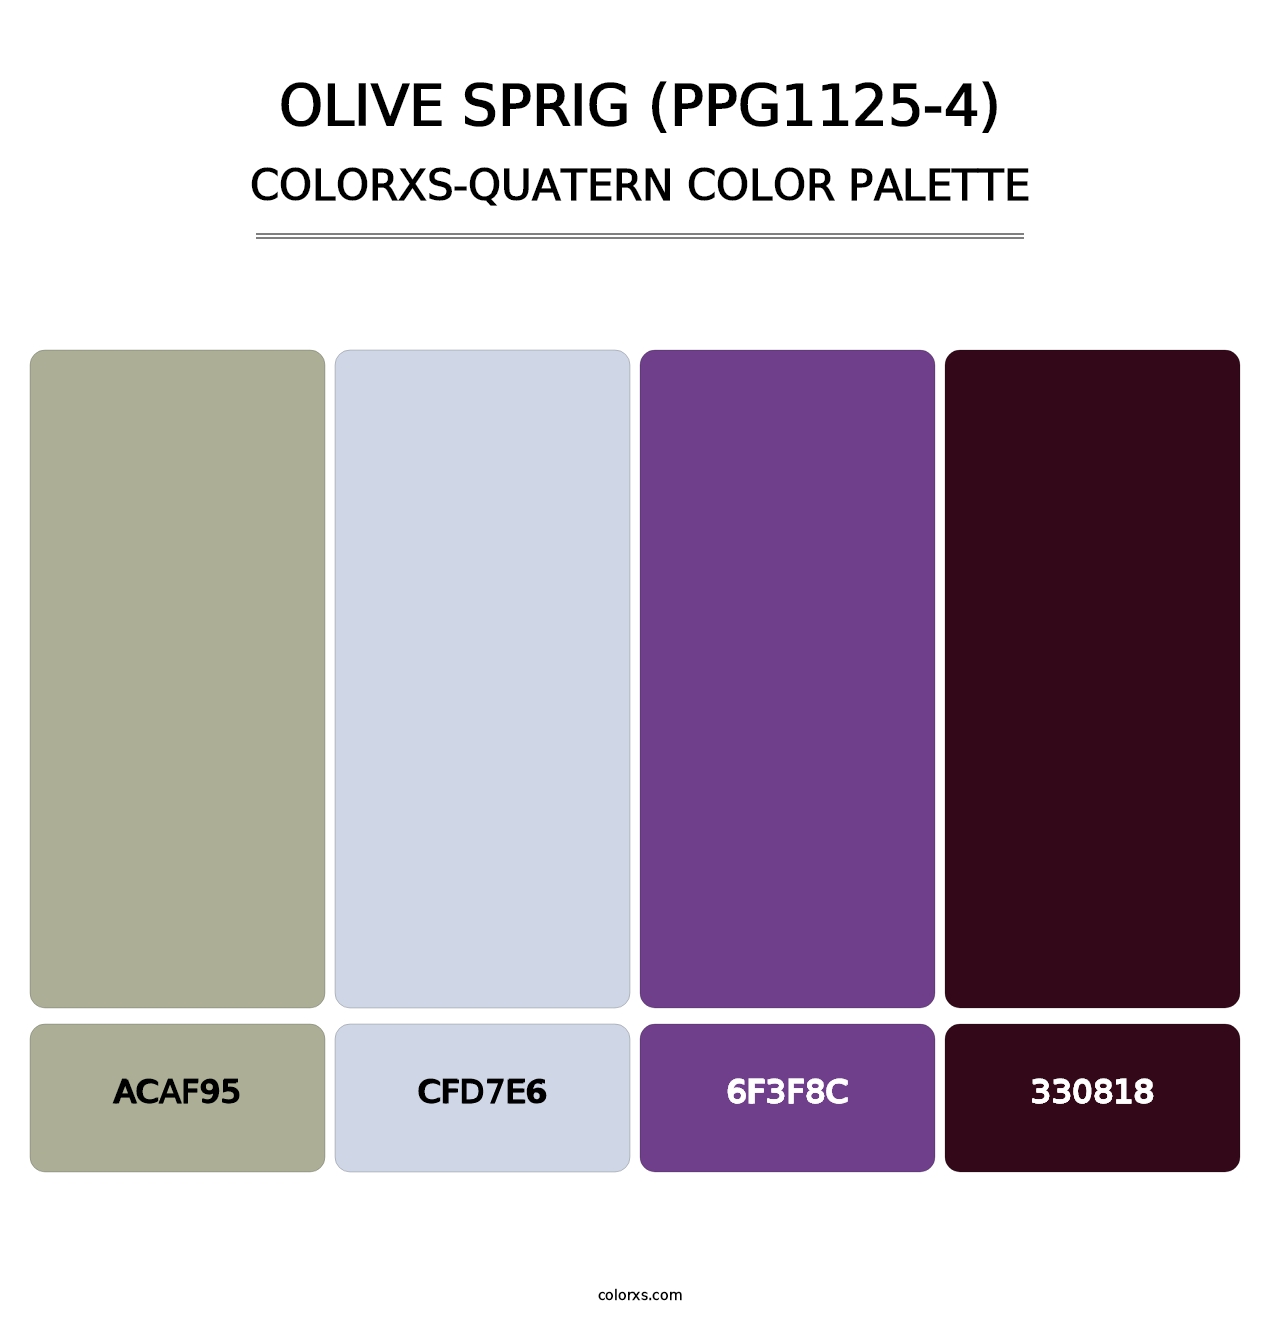 Olive Sprig (PPG1125-4) - Colorxs Quatern Palette